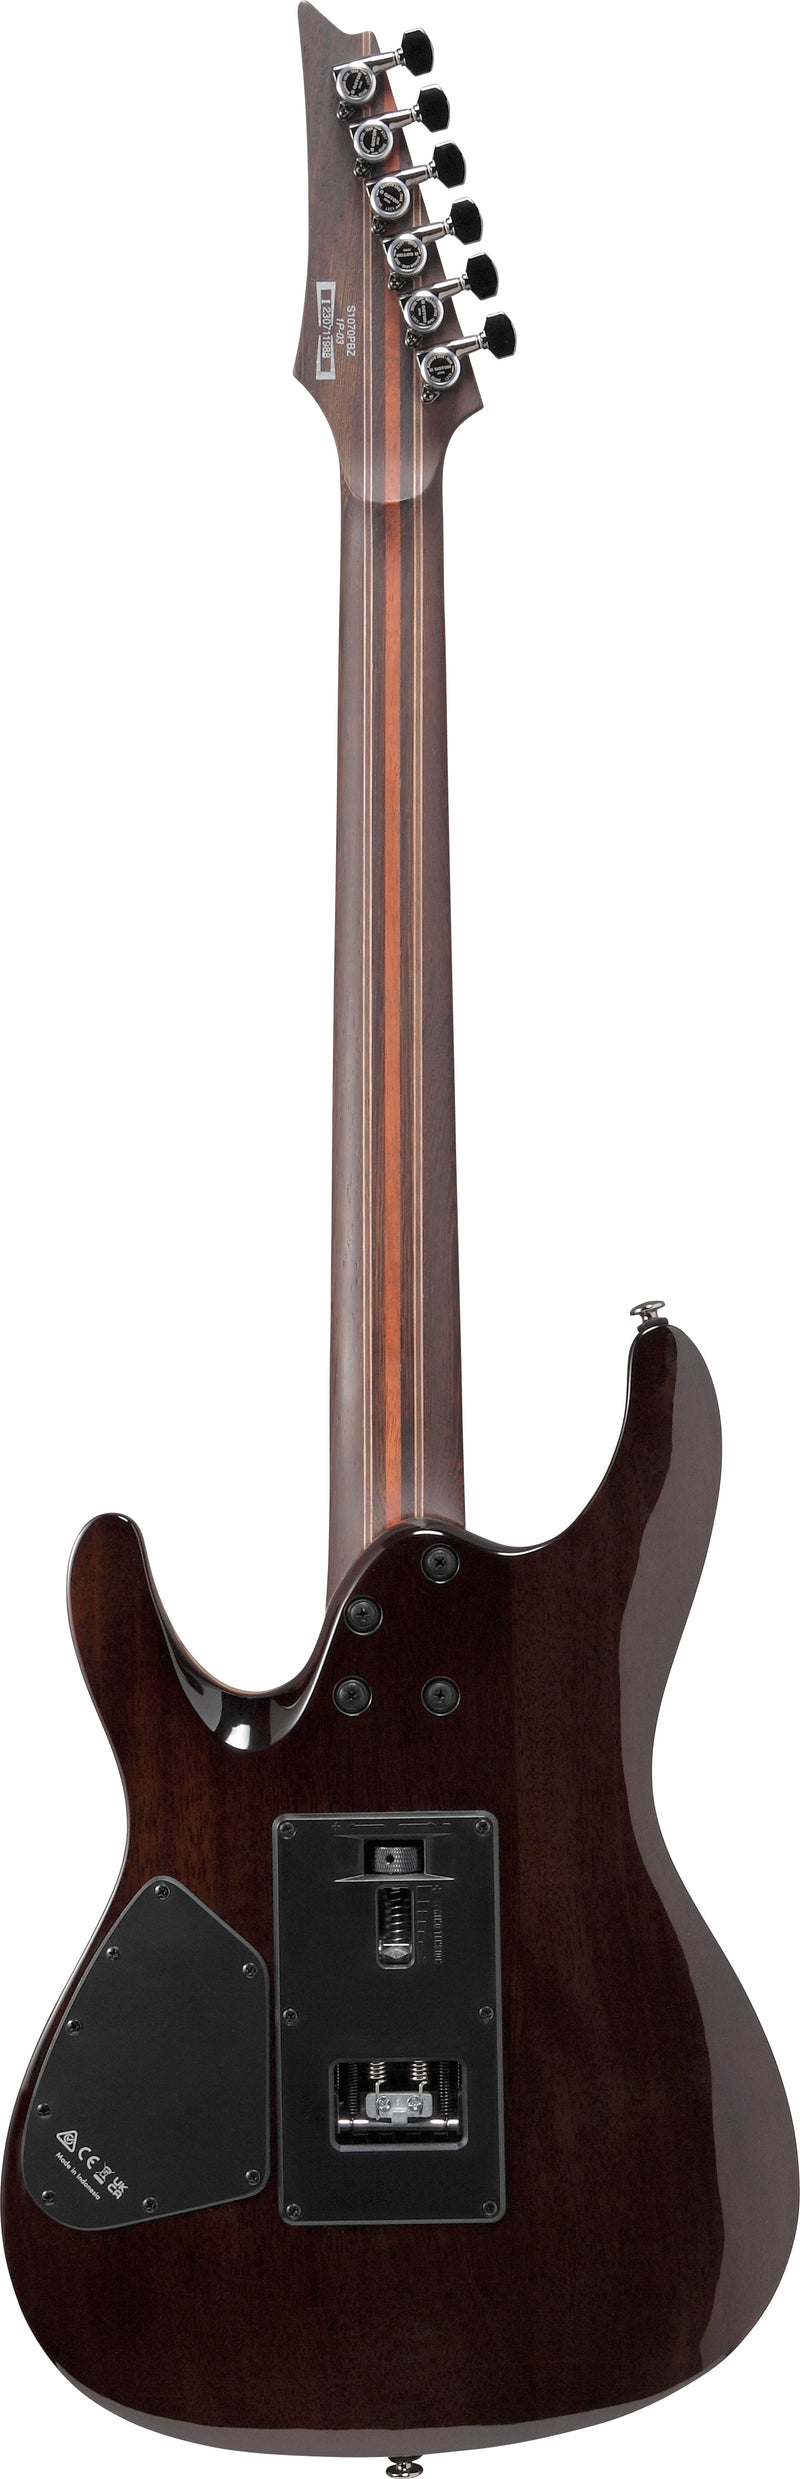 Ibanez S1070PBZ PREMIUM Electric Guitar (Charcoal Black Burst)